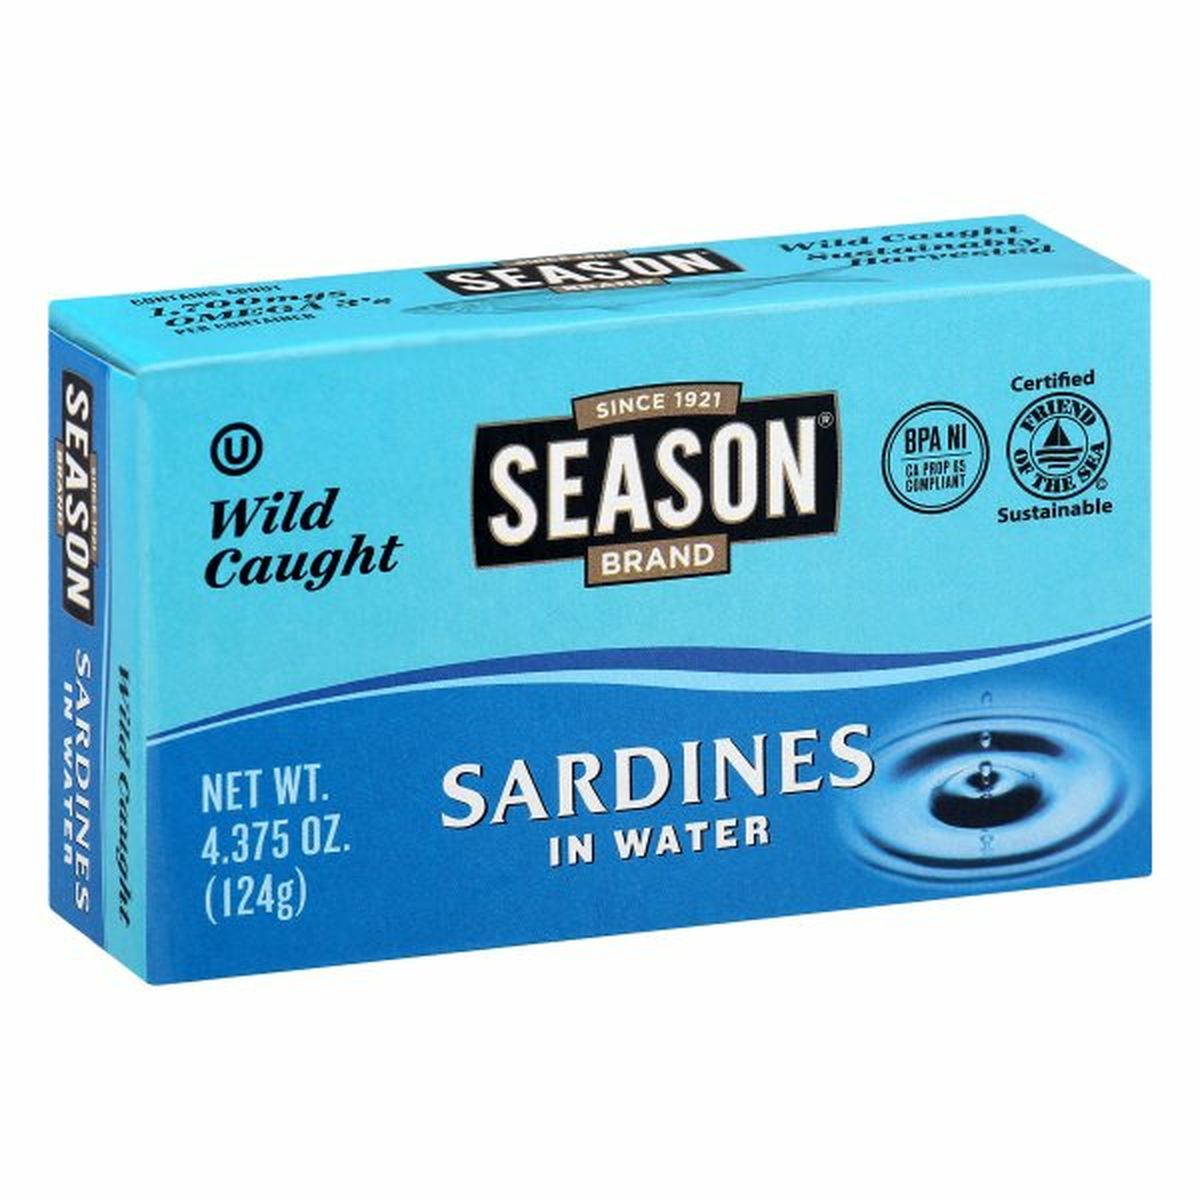 Calories in Season Brand Sardines in Water